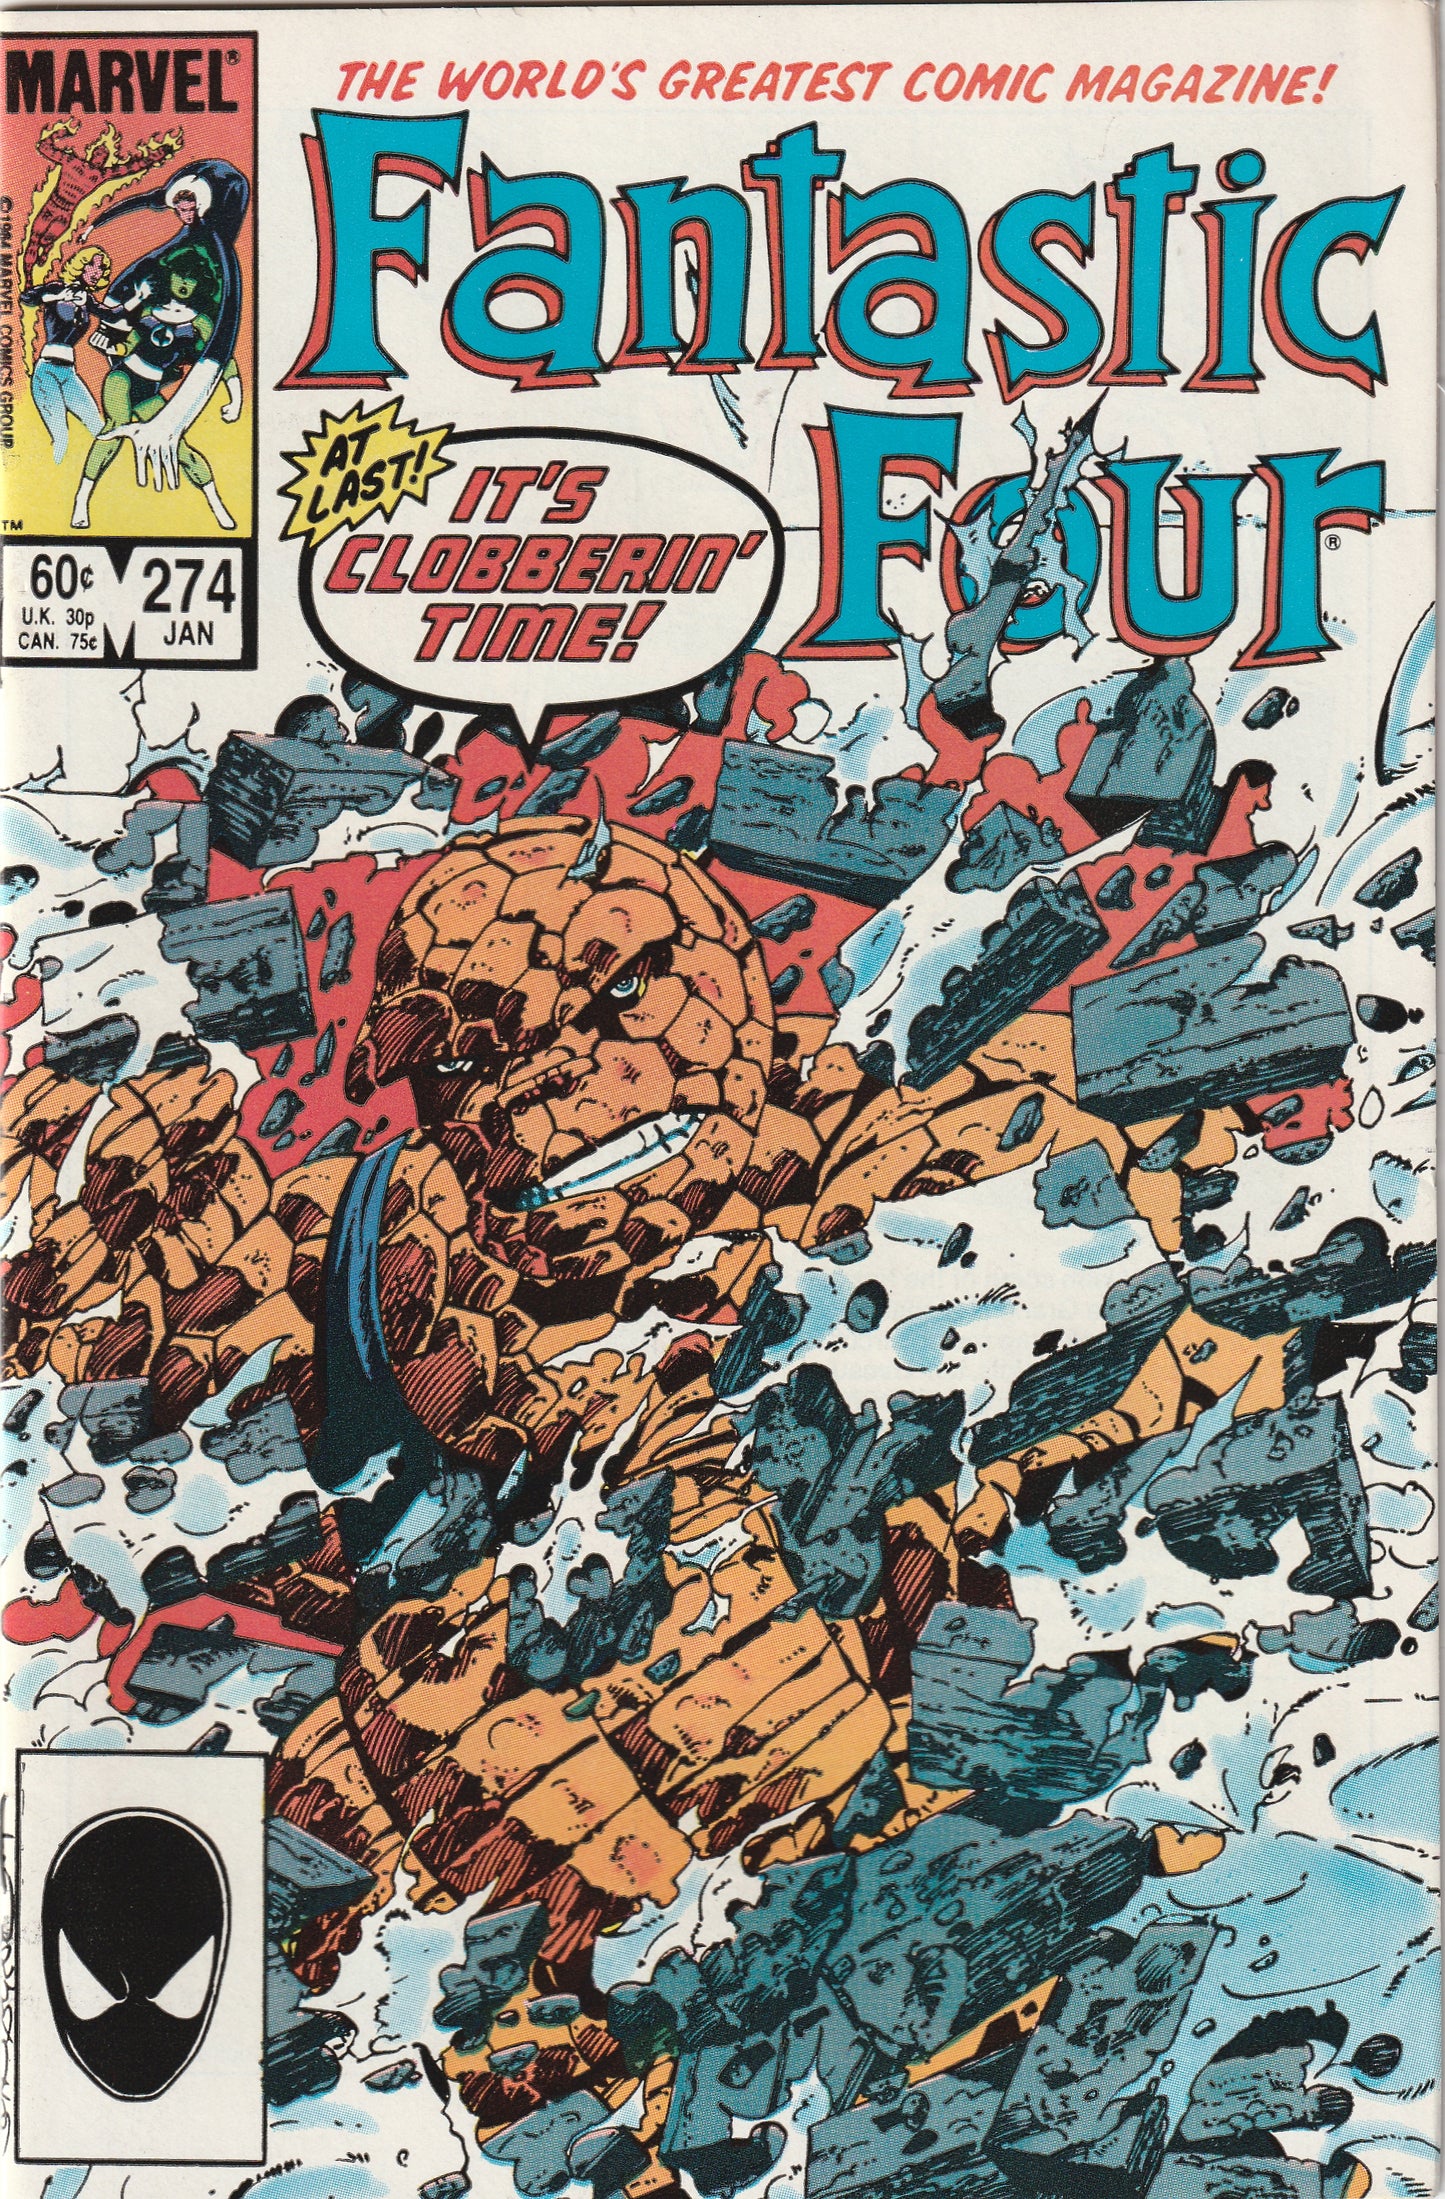 Fantastic Four #274 (1985) - Spider-Man's Alien Costume appearance